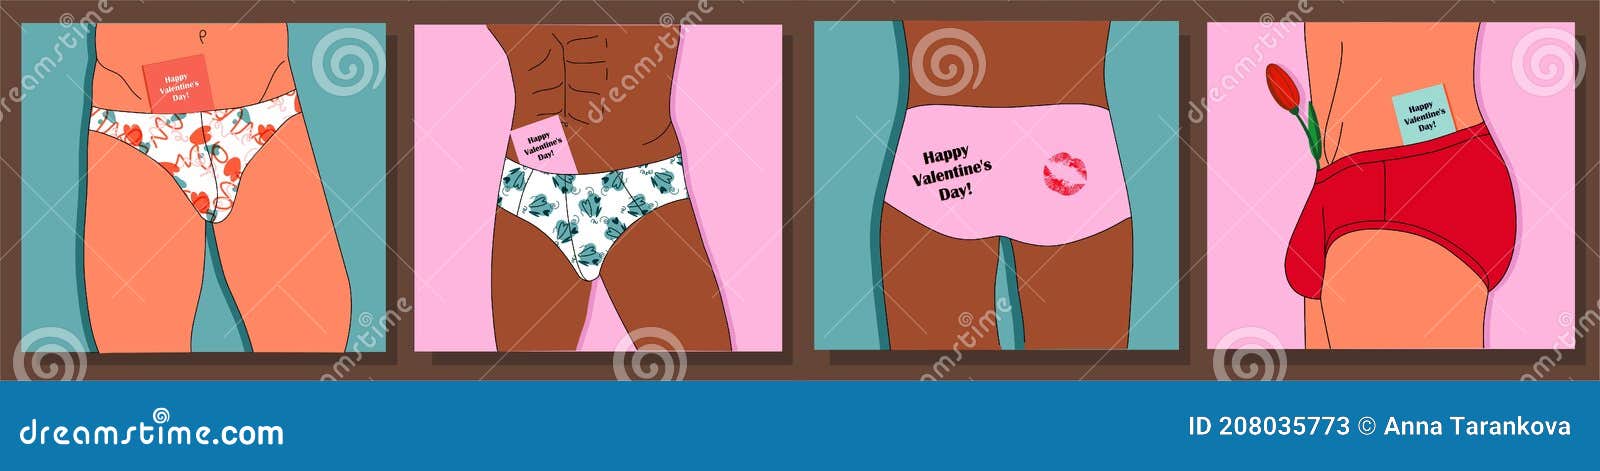 Valentine S Day. Man. Men S Underwear Stock Vector - Illustration of  design, invitation: 208035773